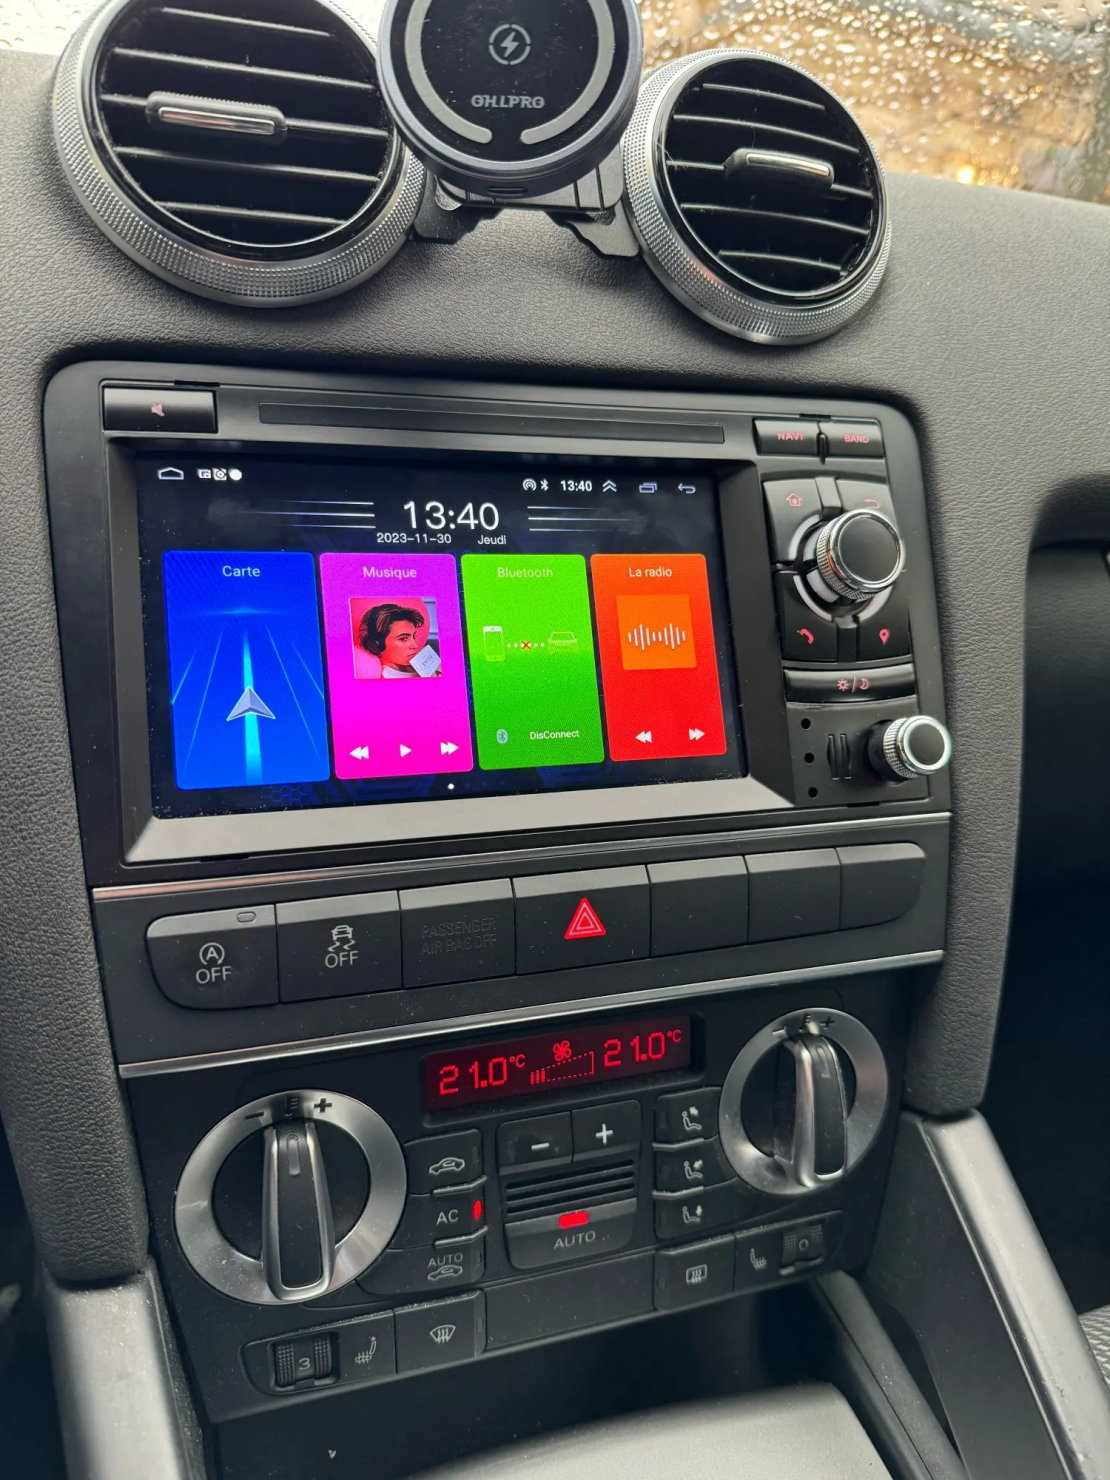 Android CarPlay Audi A3 8V